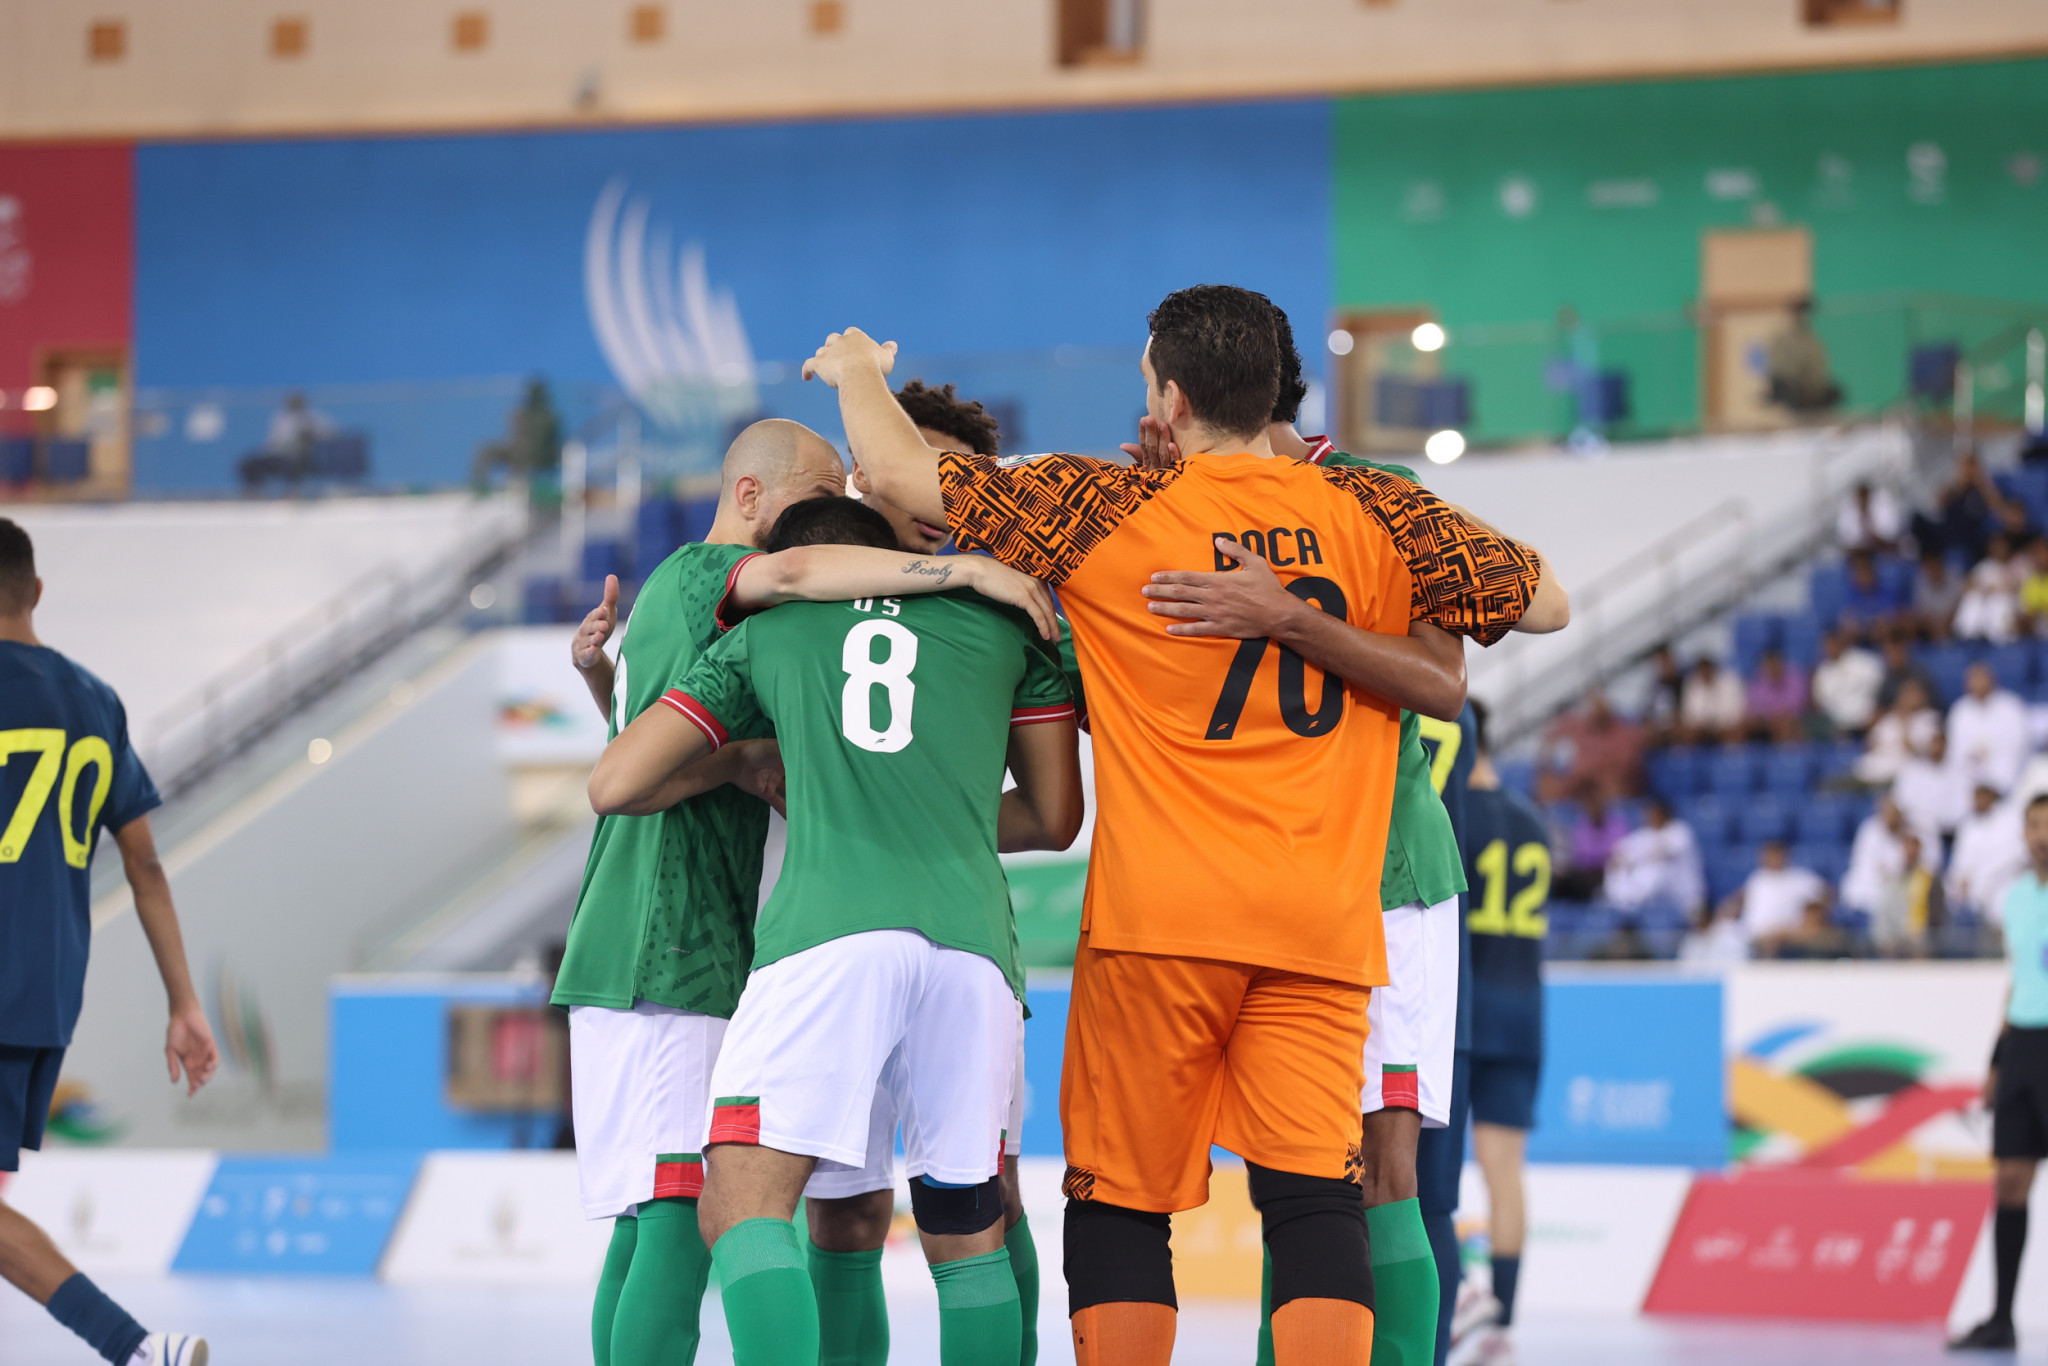 Al-Eitifaq bettered Al-Nassr in the men's futsal final ©Saudi Games